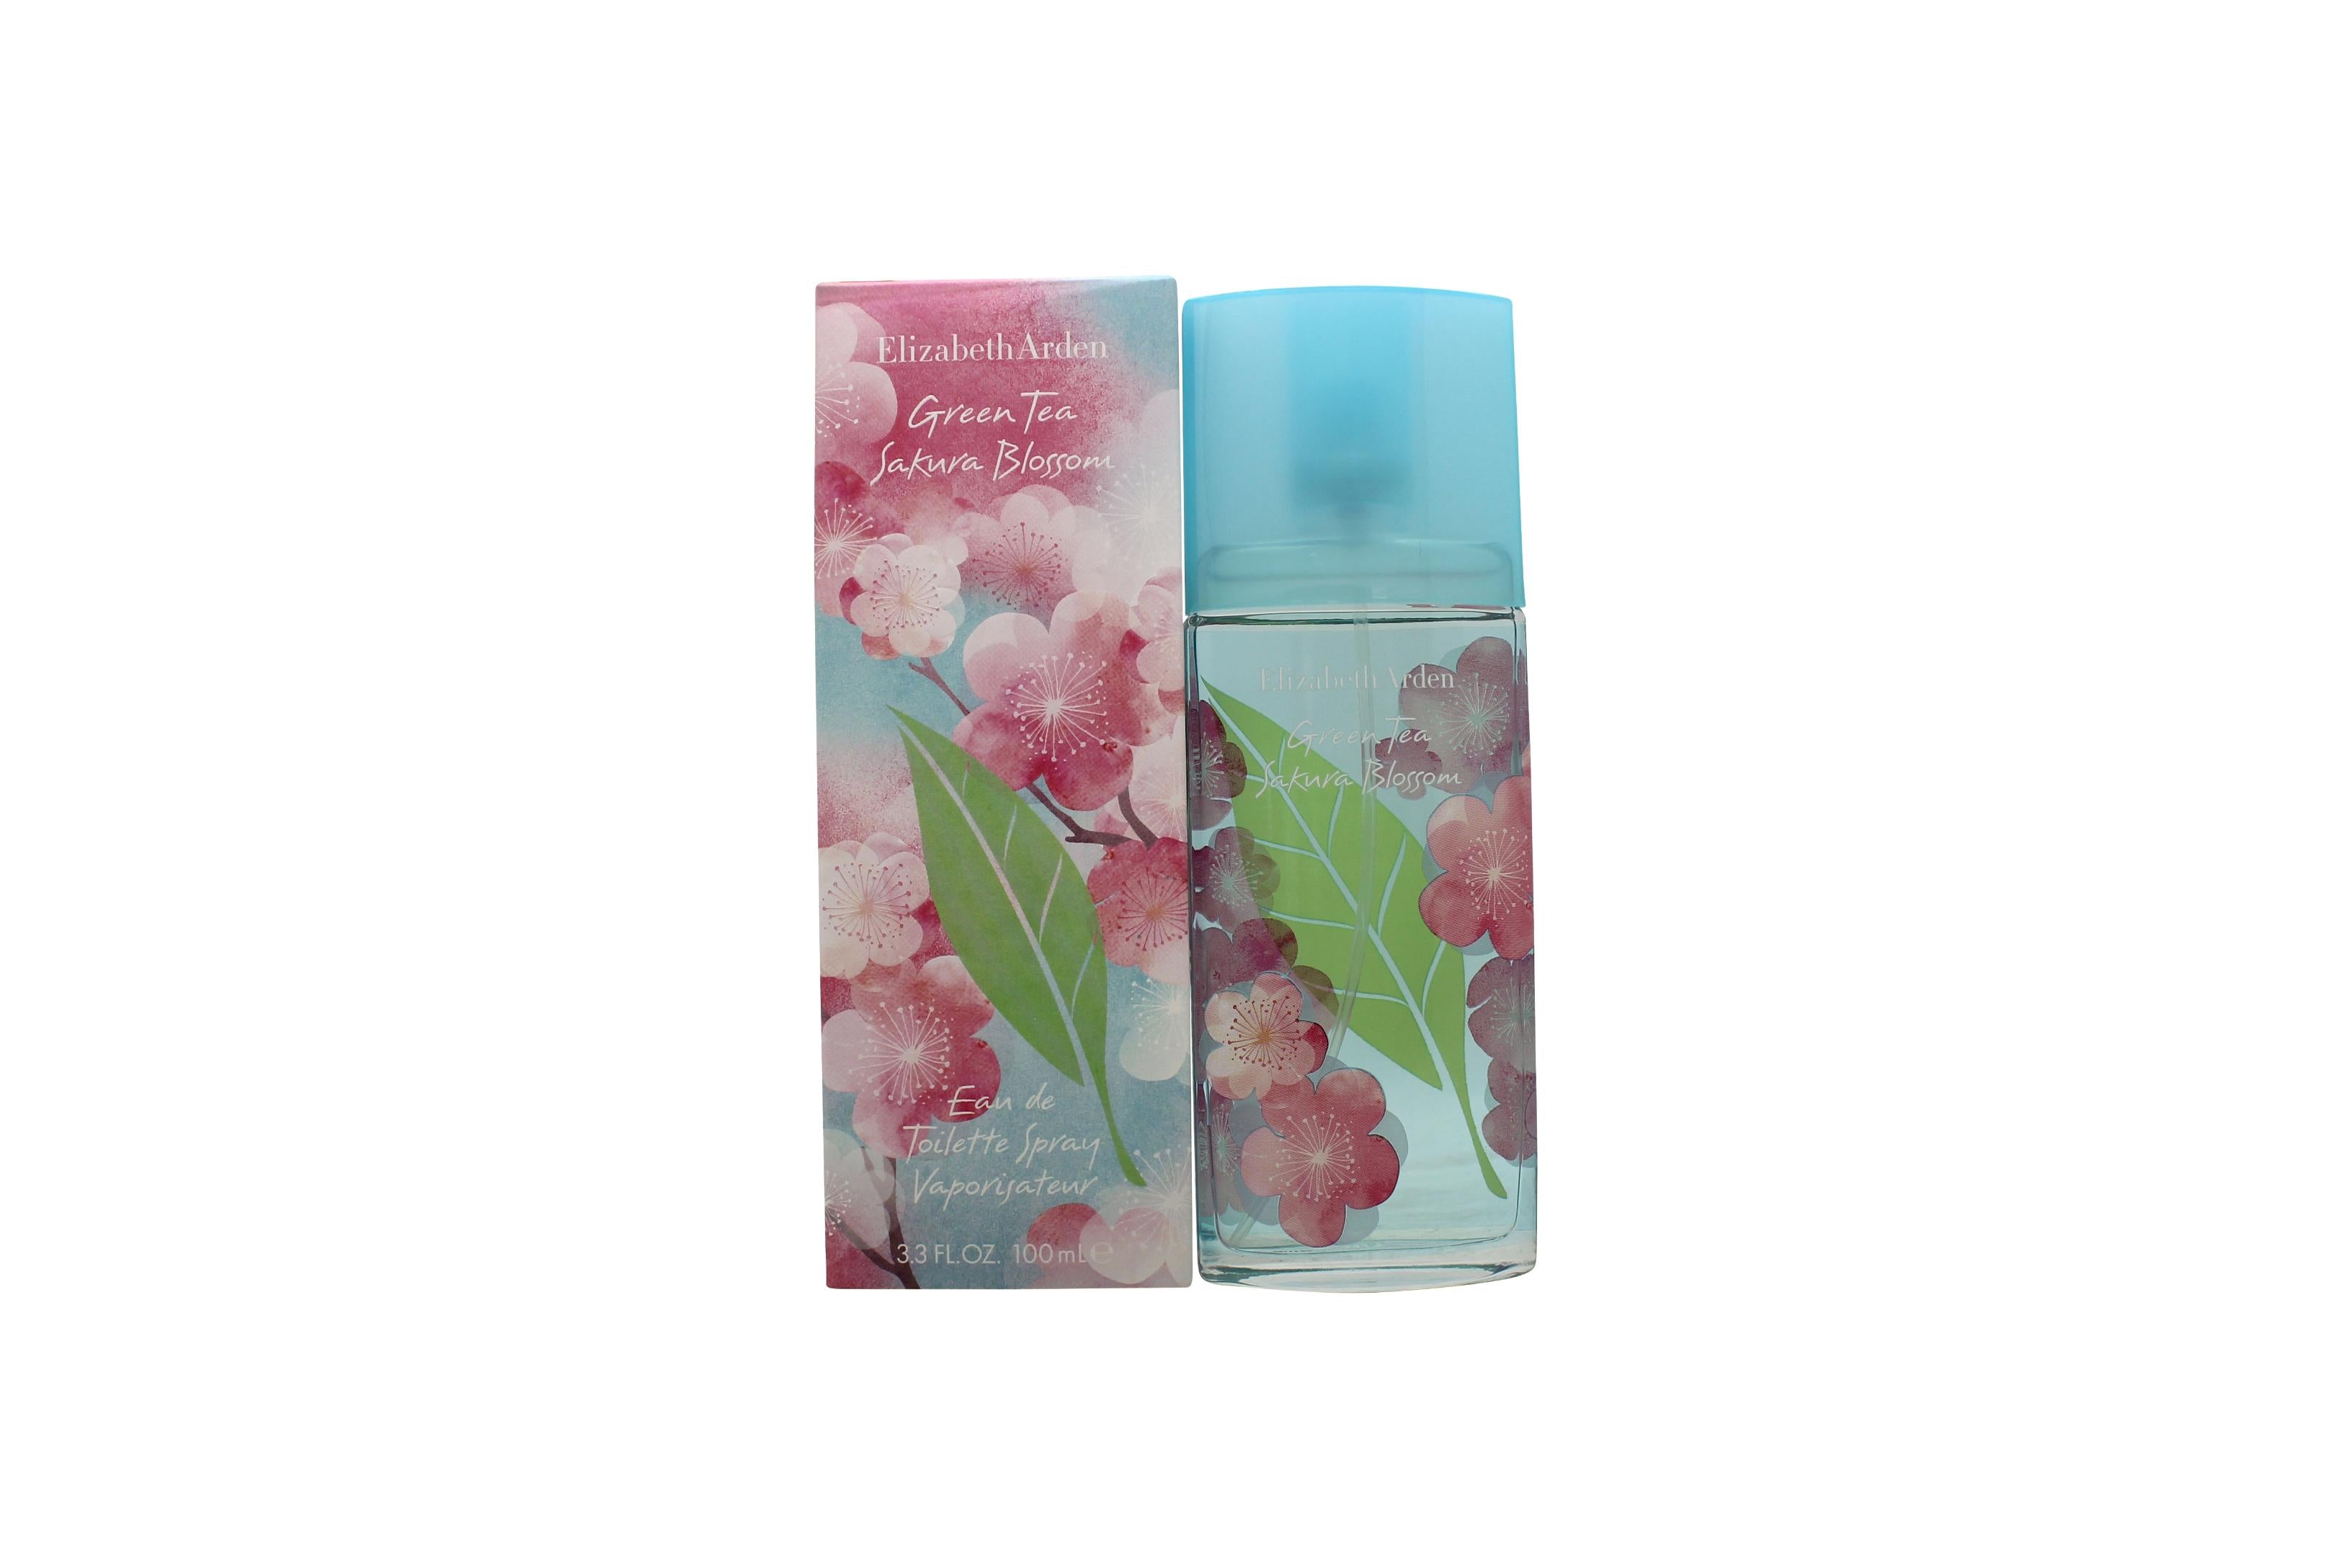 View Elizabeth Arden Green Tea Sakura Blossom Eau de Toilette 100ml Spray information